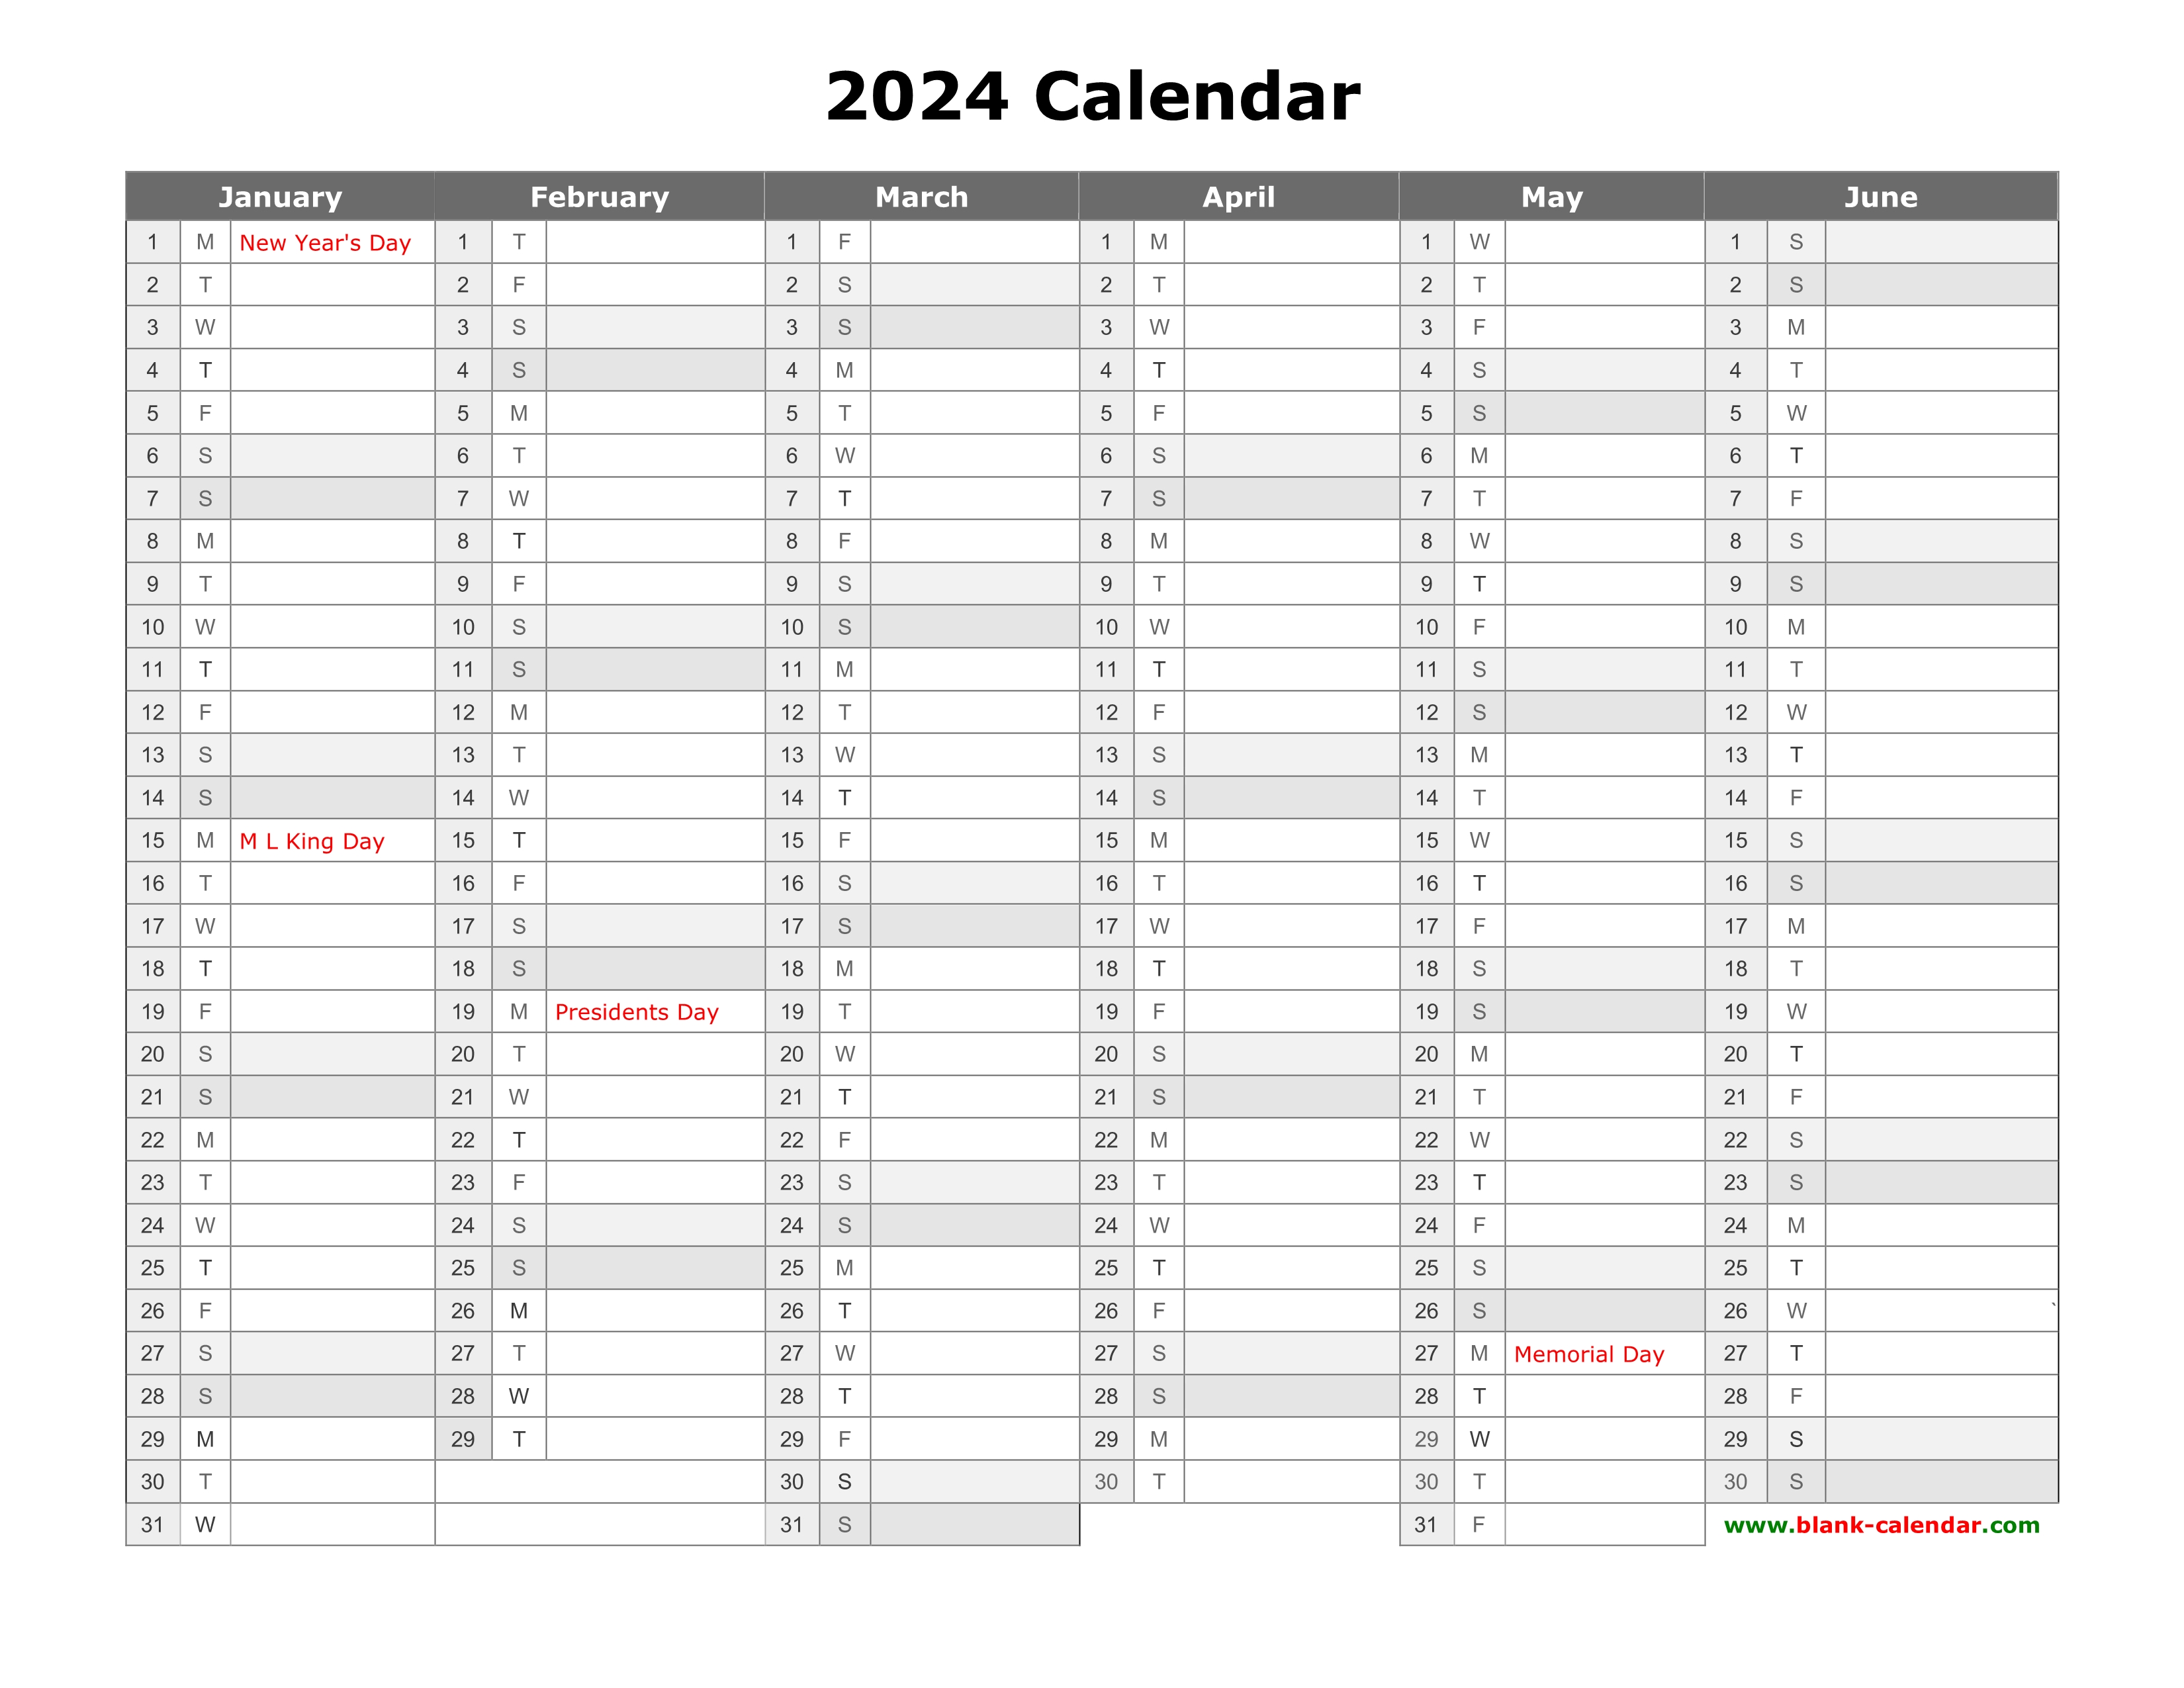 free-printable-calendars-calendarsquick-full-year-calendar-2021